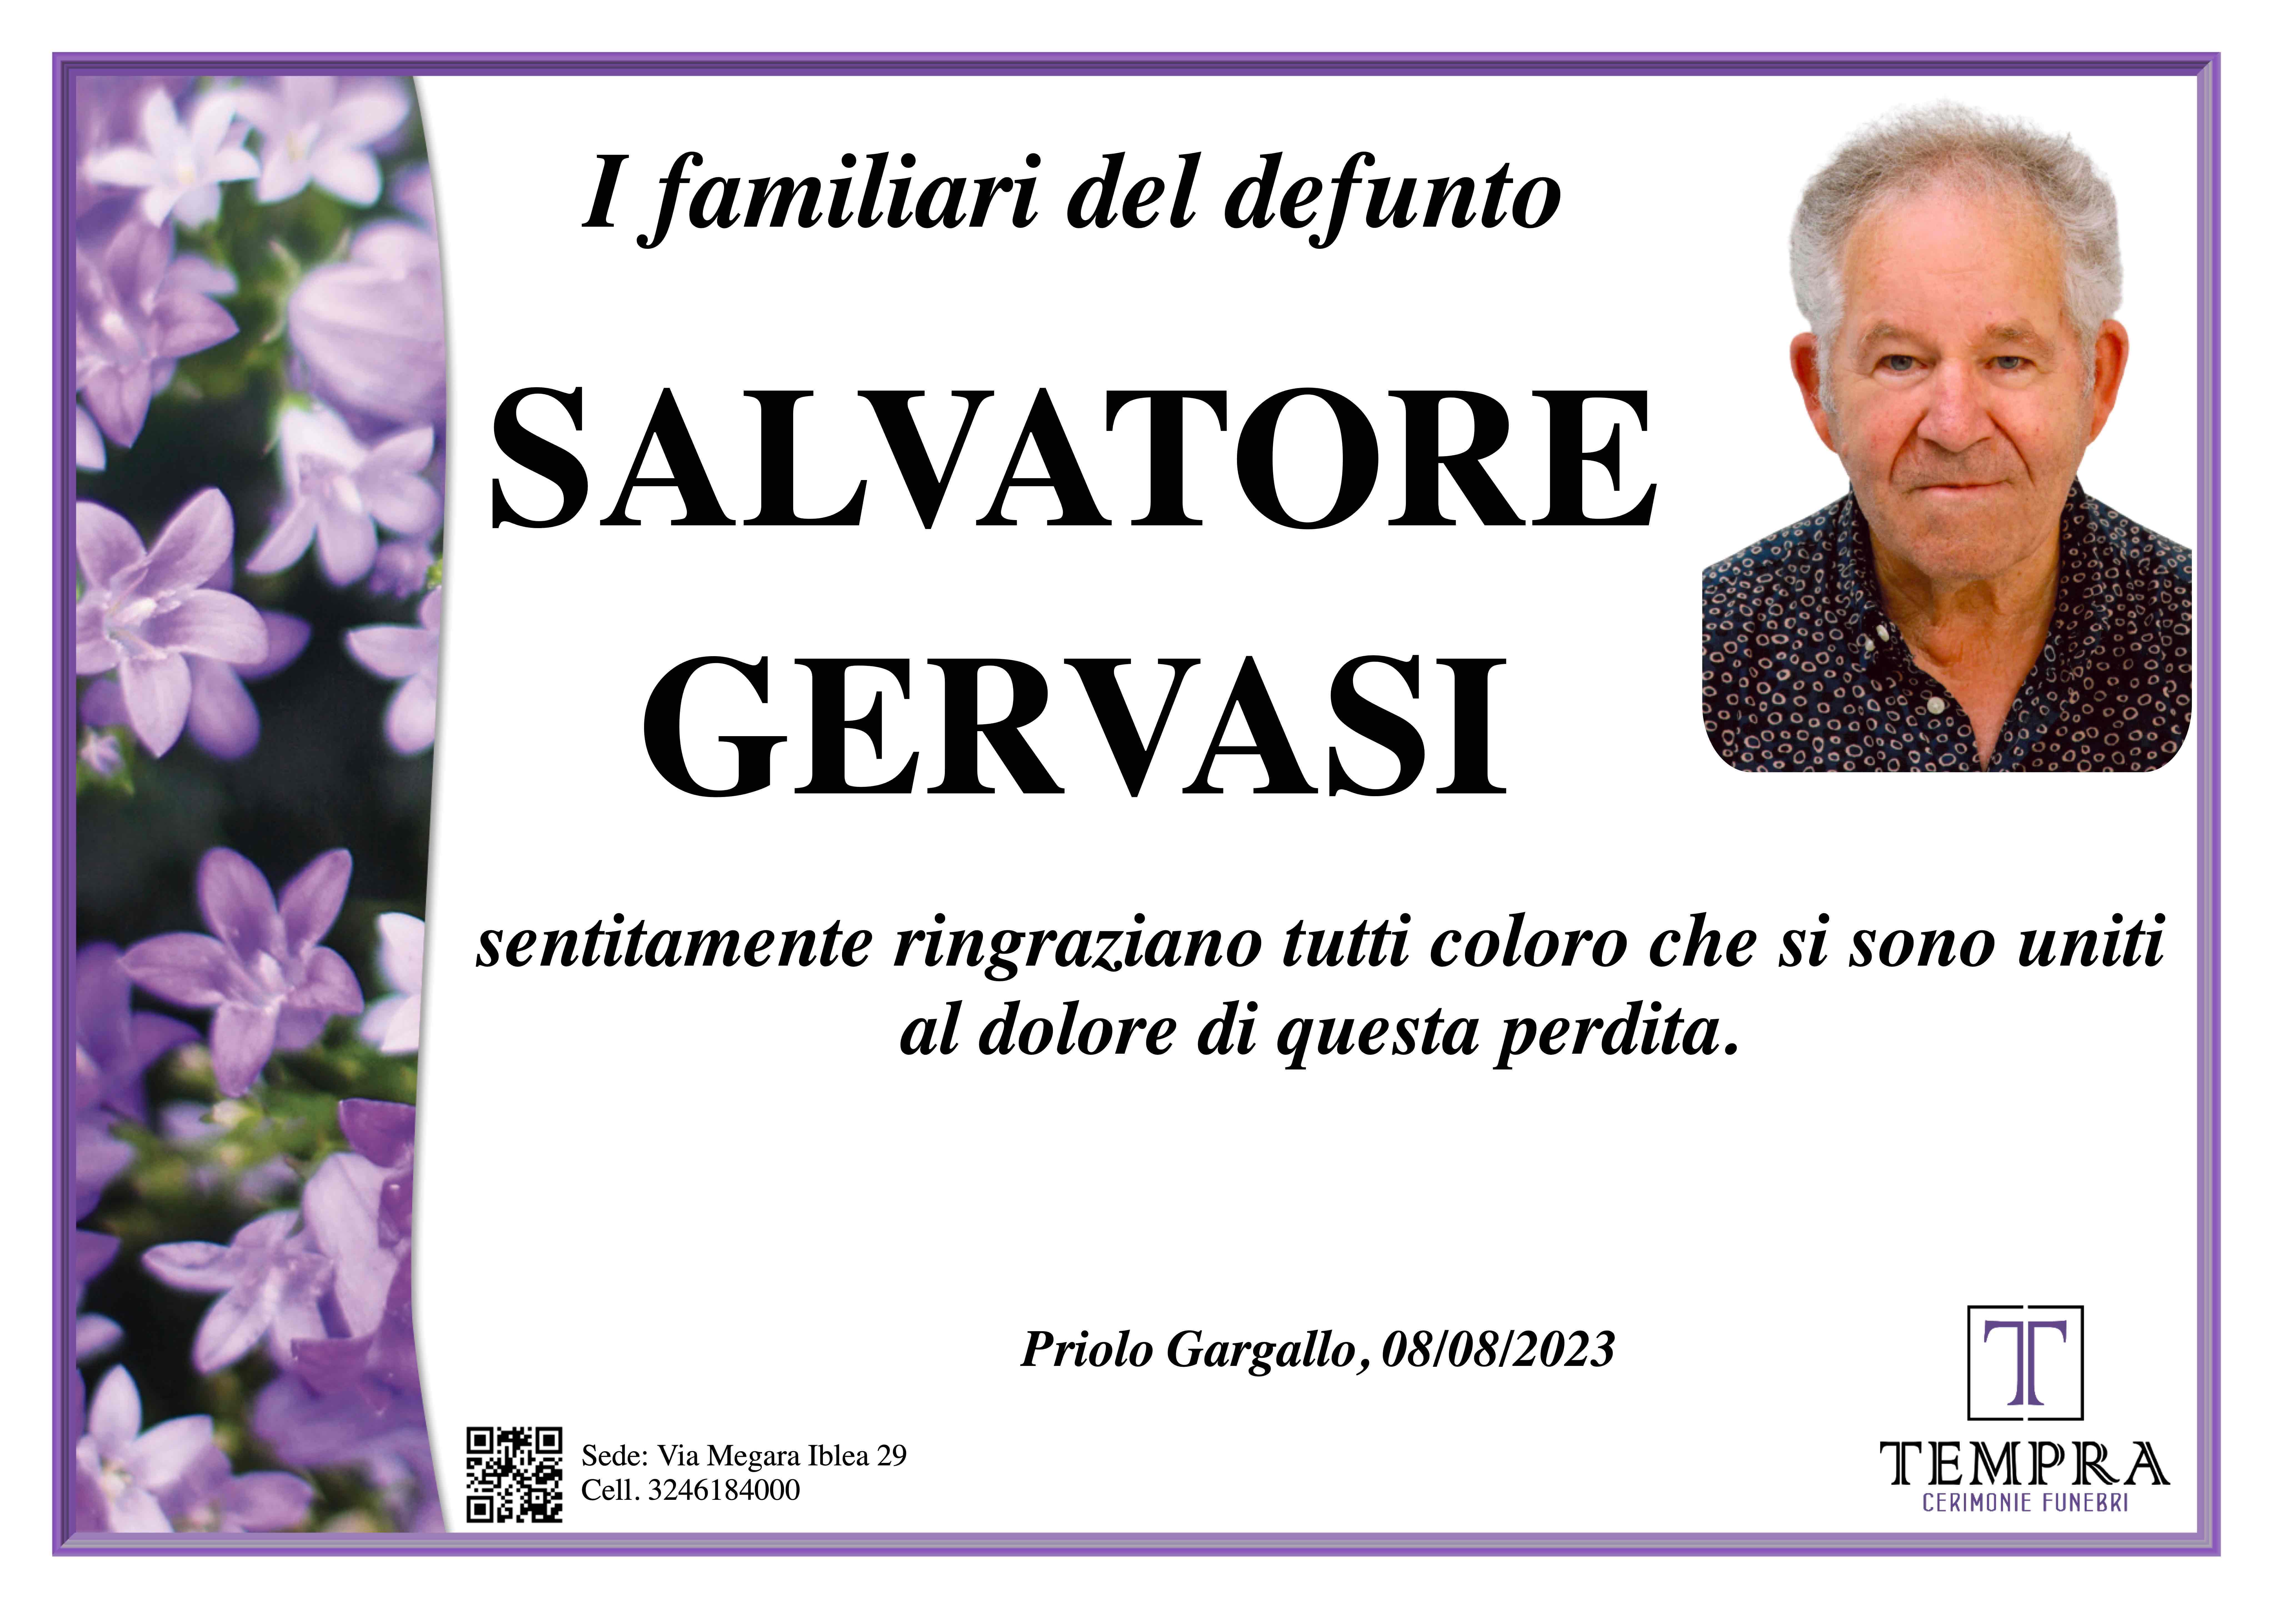 Salvatore Gervasi